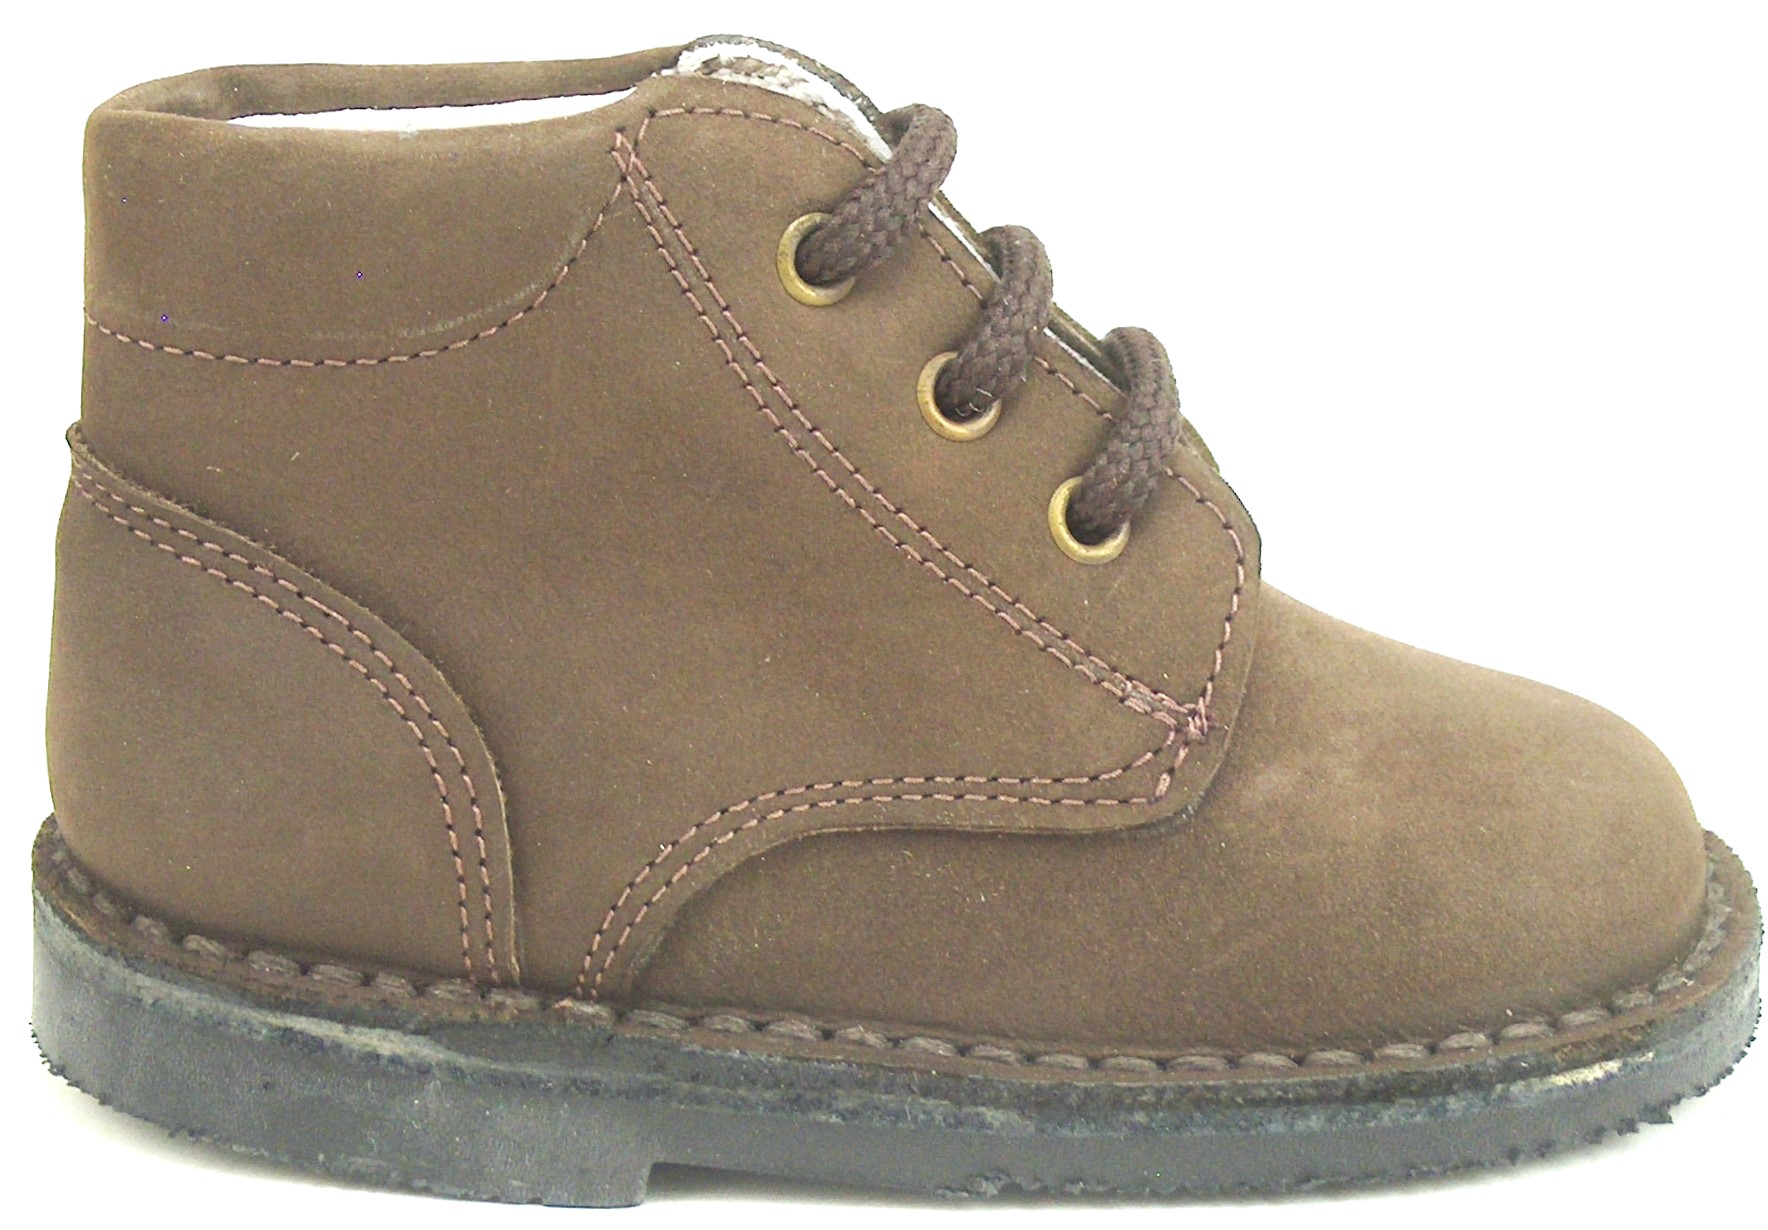 A-534 - Brown Chukka Boots - Euro 20 Size 4.5